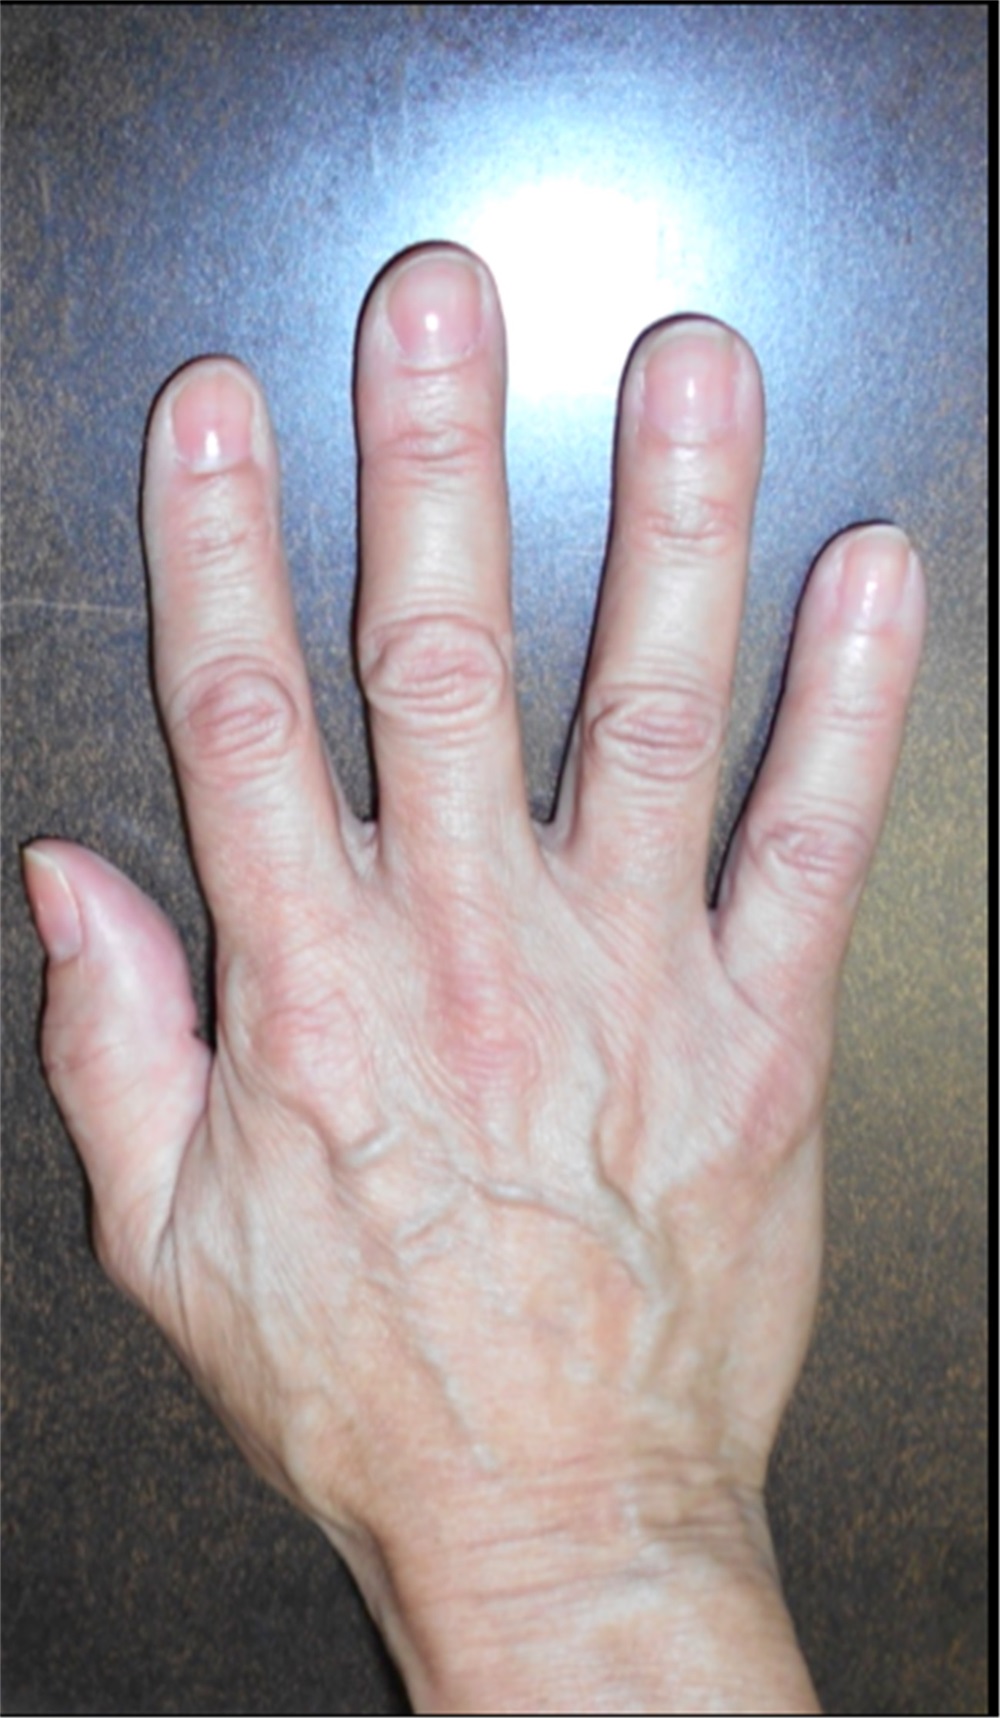 Plastic Surgery Associates offers treatment to help patients regain hand  function